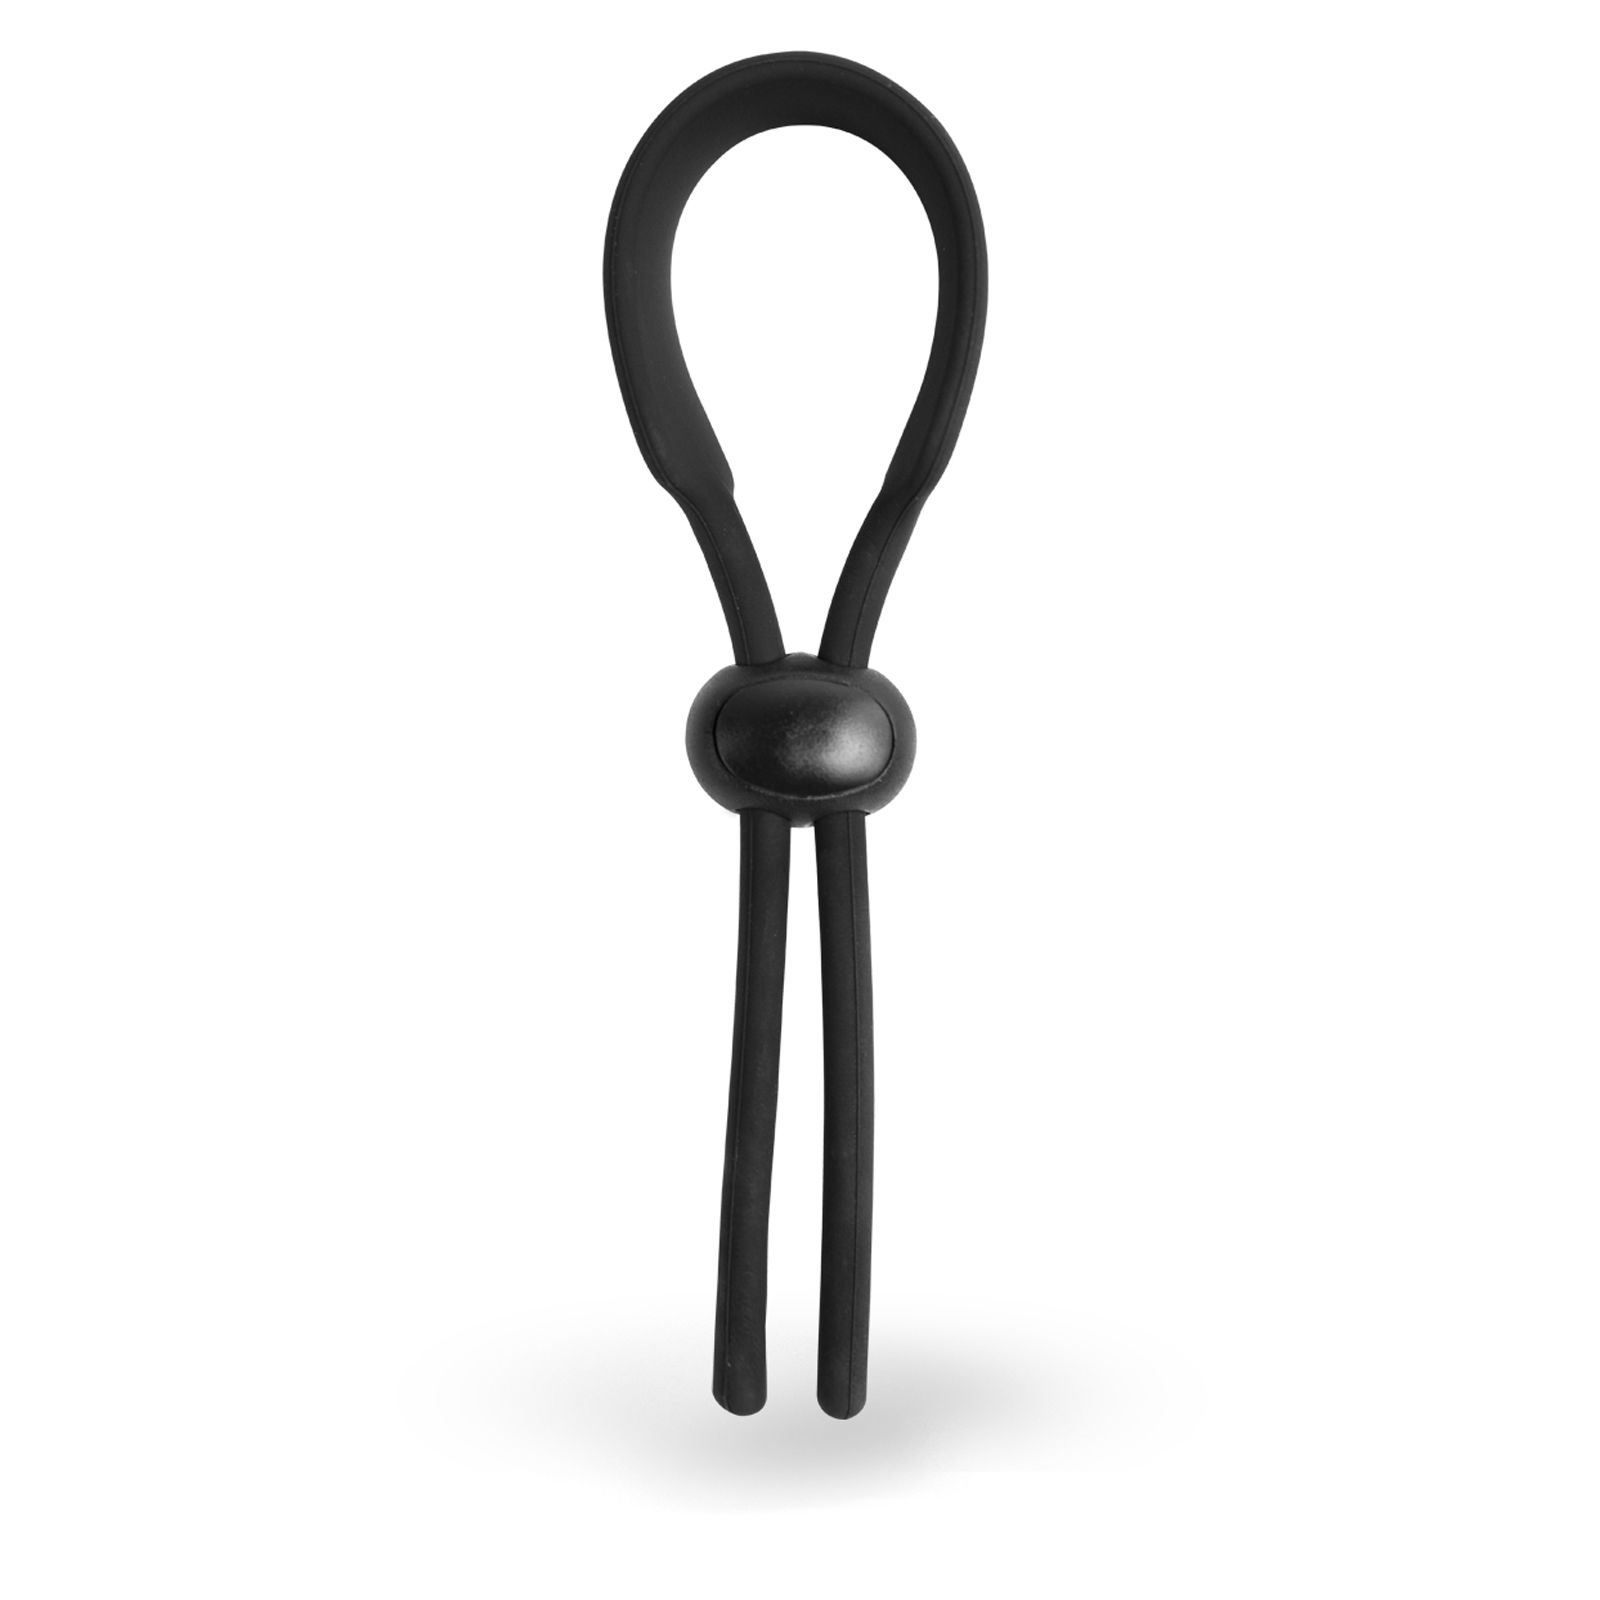 Velv Or - Penisschlaufe Penisring Verstellbare Größe in Schwarz Silikon